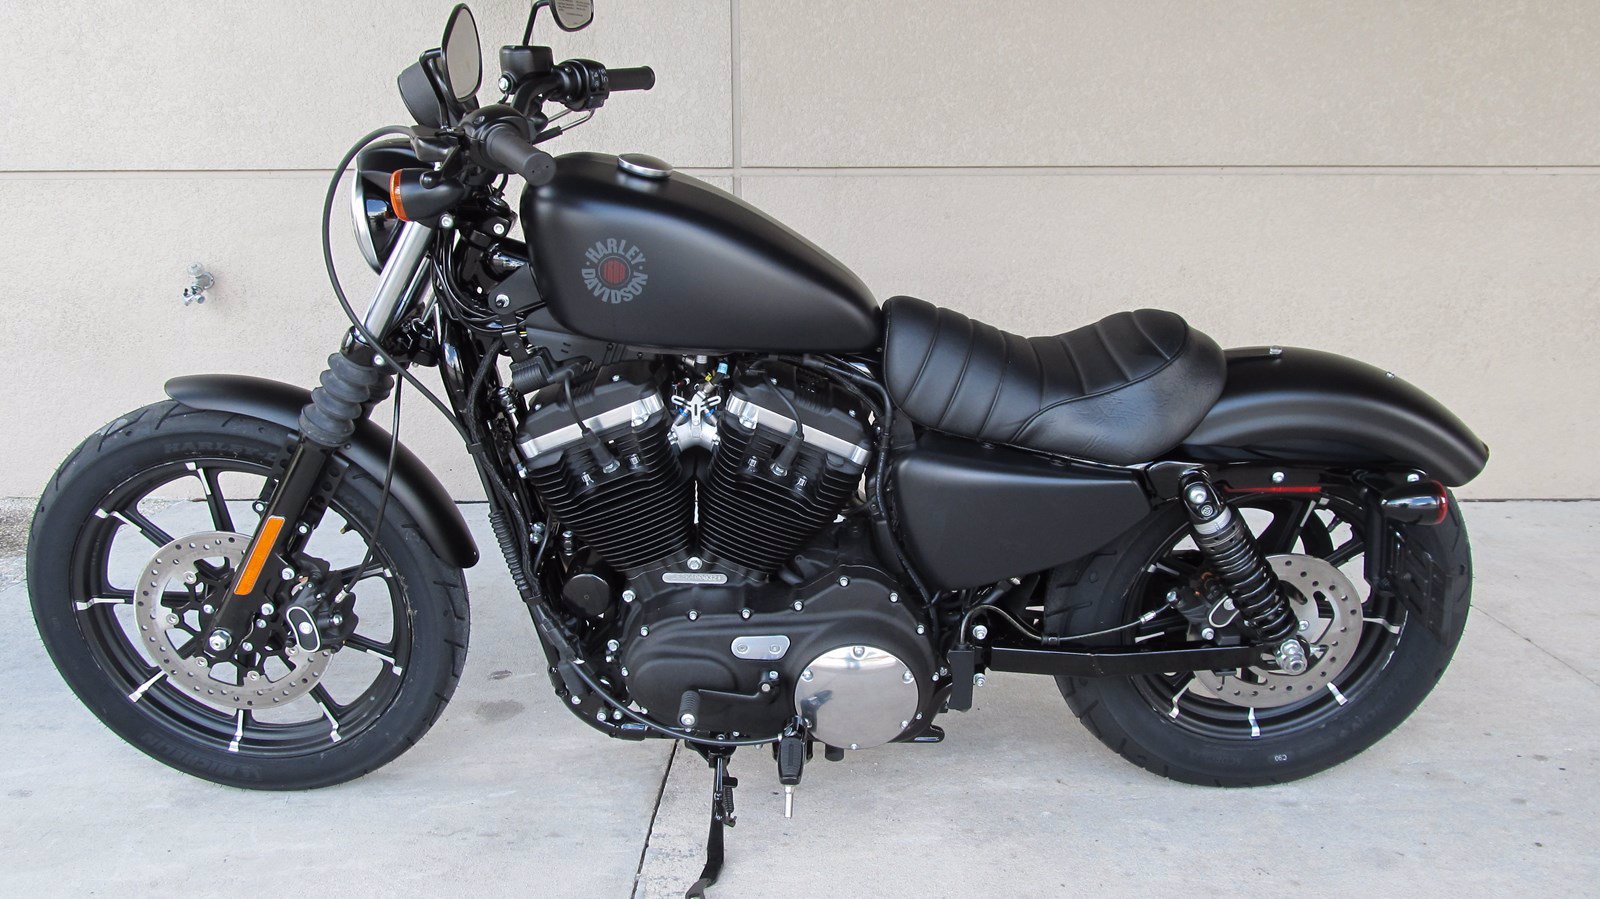 Harley Davidson 2019 Xl883n Inspirasi Terkini